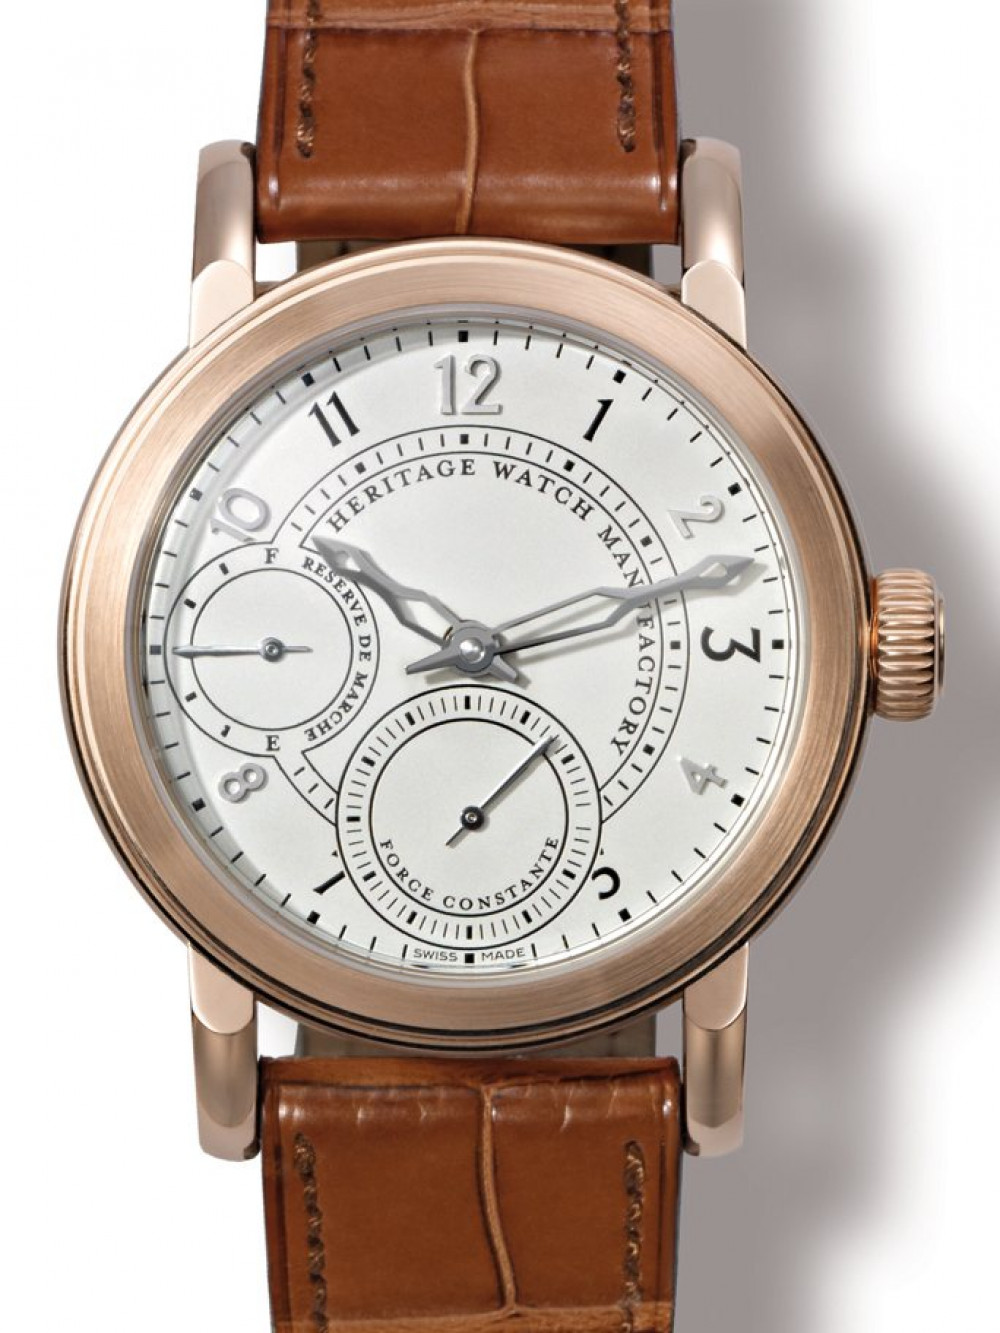 Zegarek firmy Heritage Watch Manufactory, model Tensus